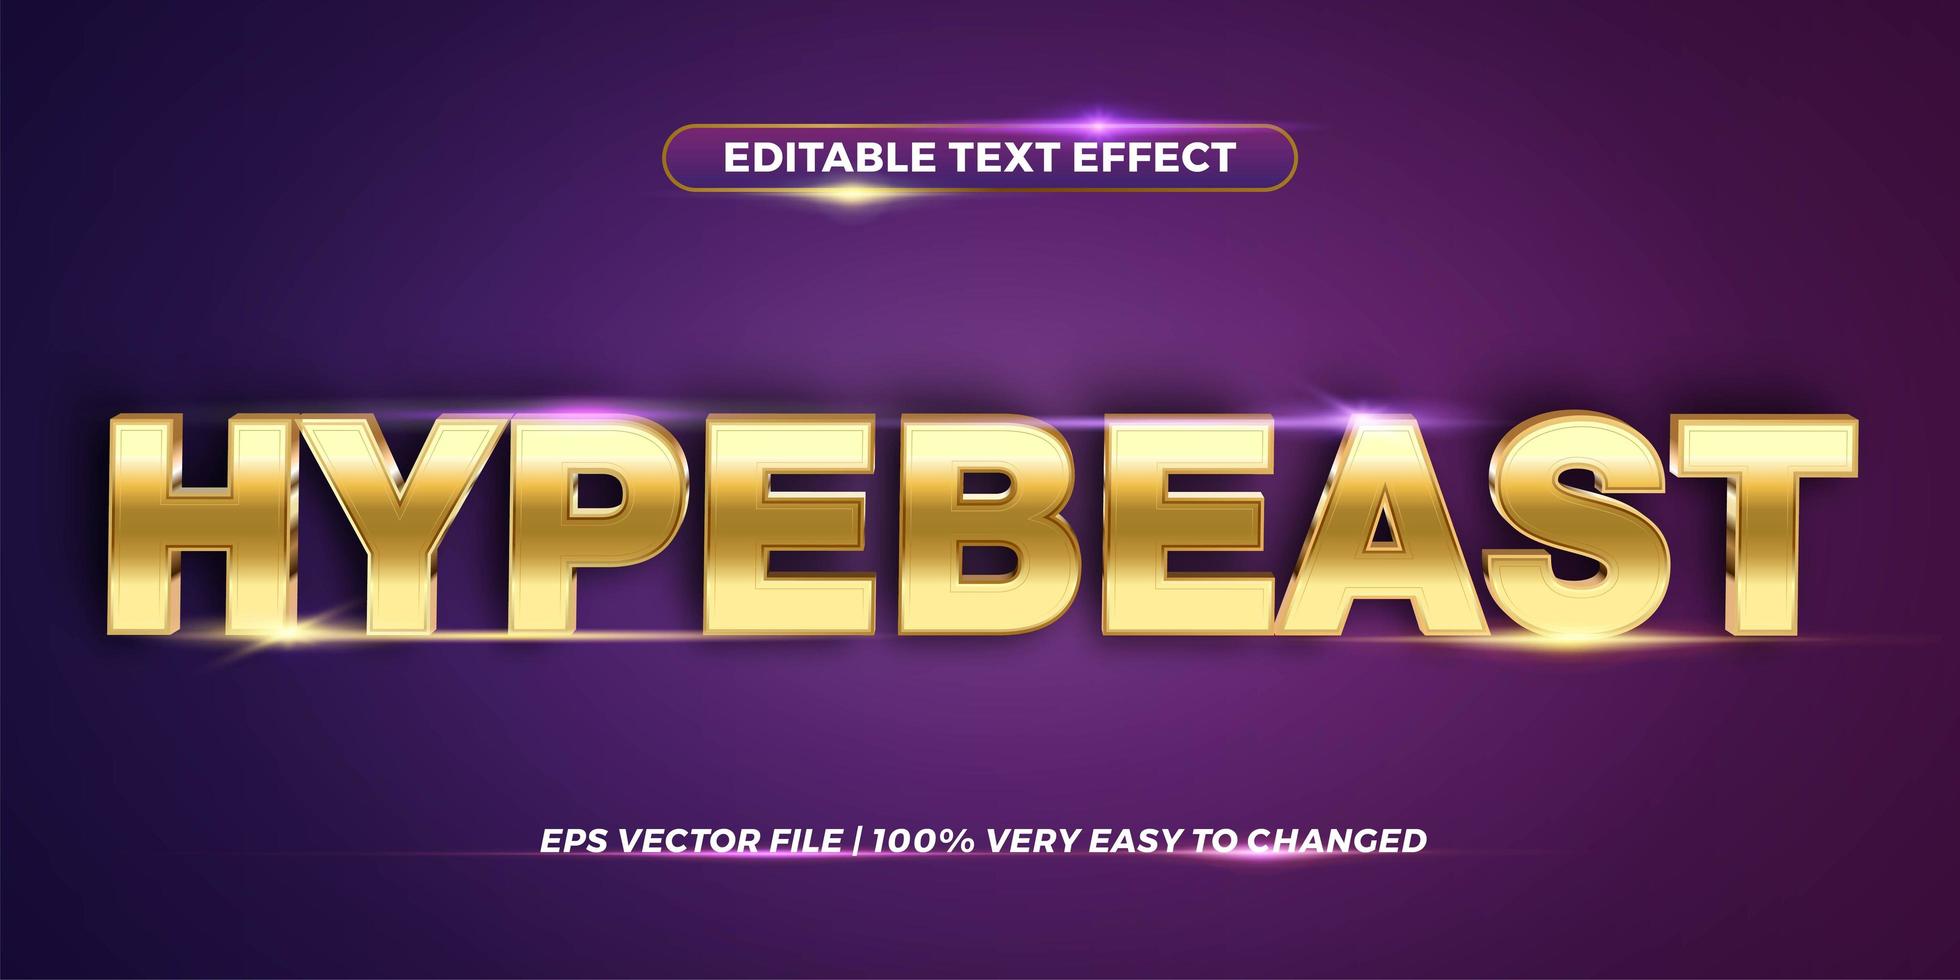 Editable text effect - Hypebeast text style mockup concept vector